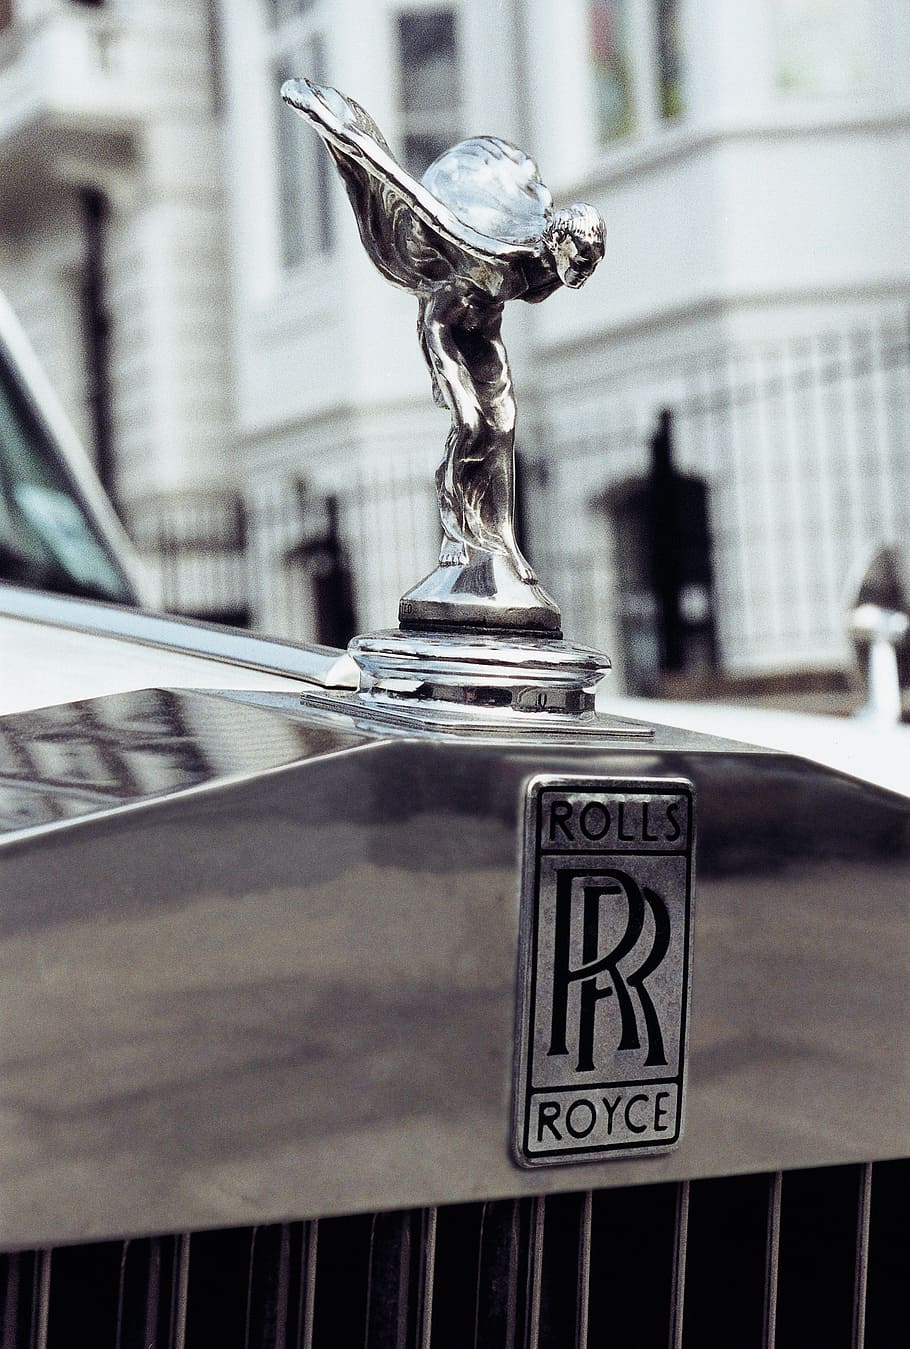 Hd Wallpaper Gray Rolls Royce Vehicle Hood Ornament Cool Figure Spirit Of Ecstasy Wallpaper Flare